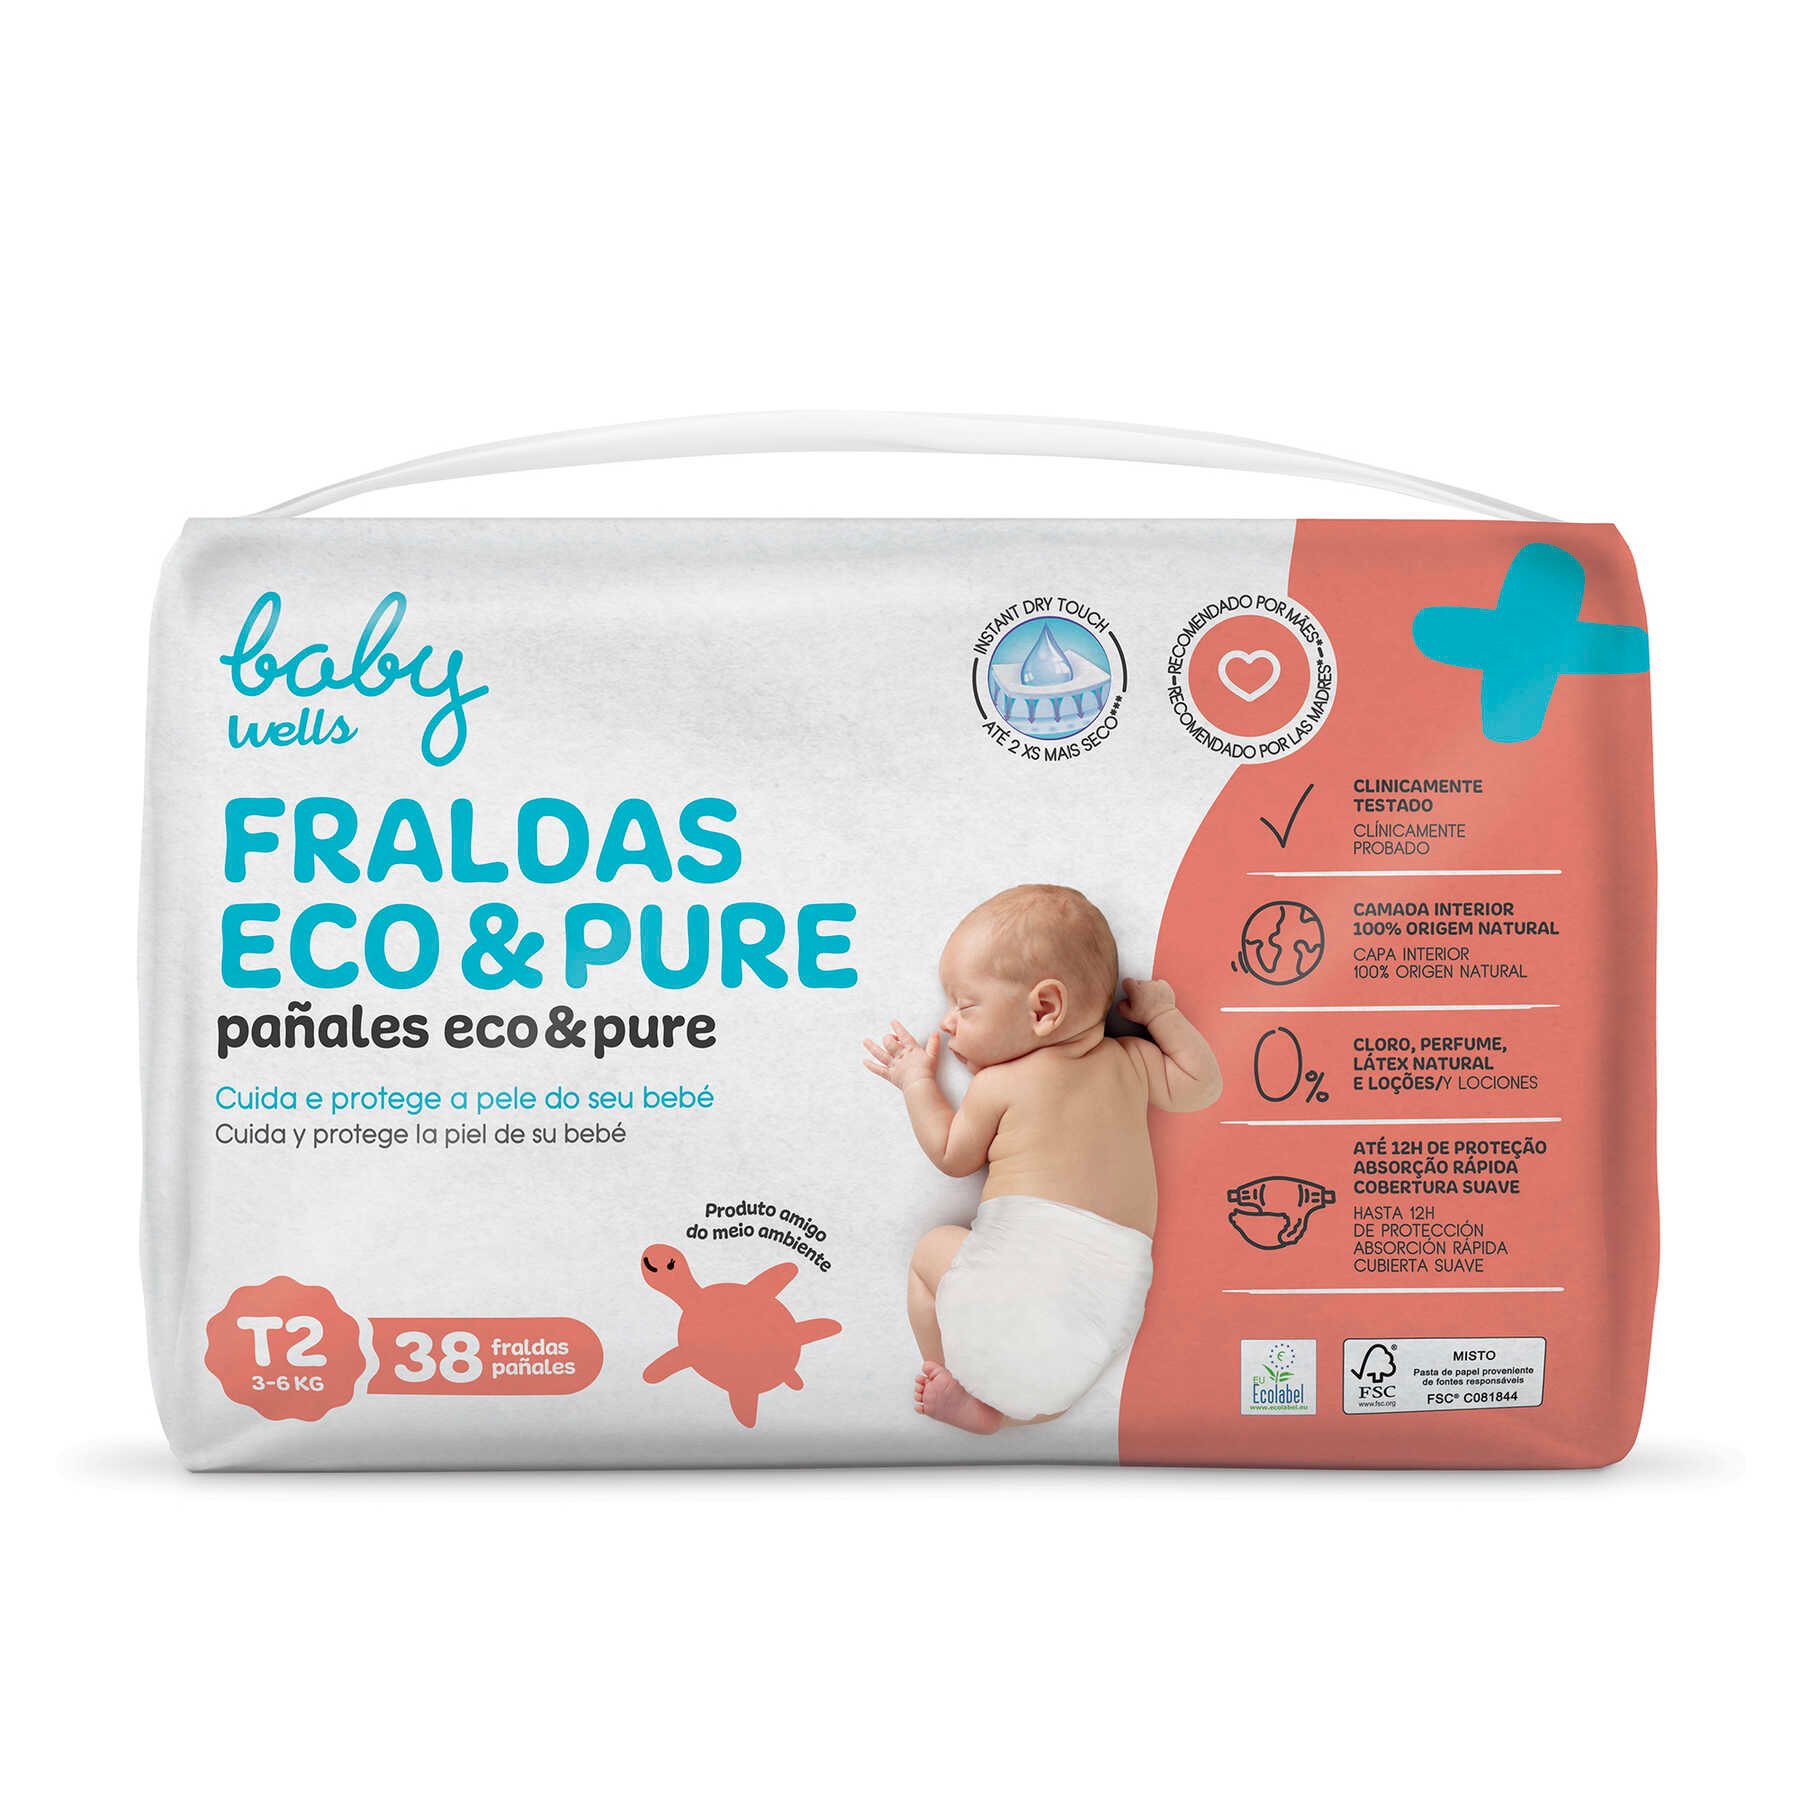 Fraldas Eco & Pure T2 Baby Wells